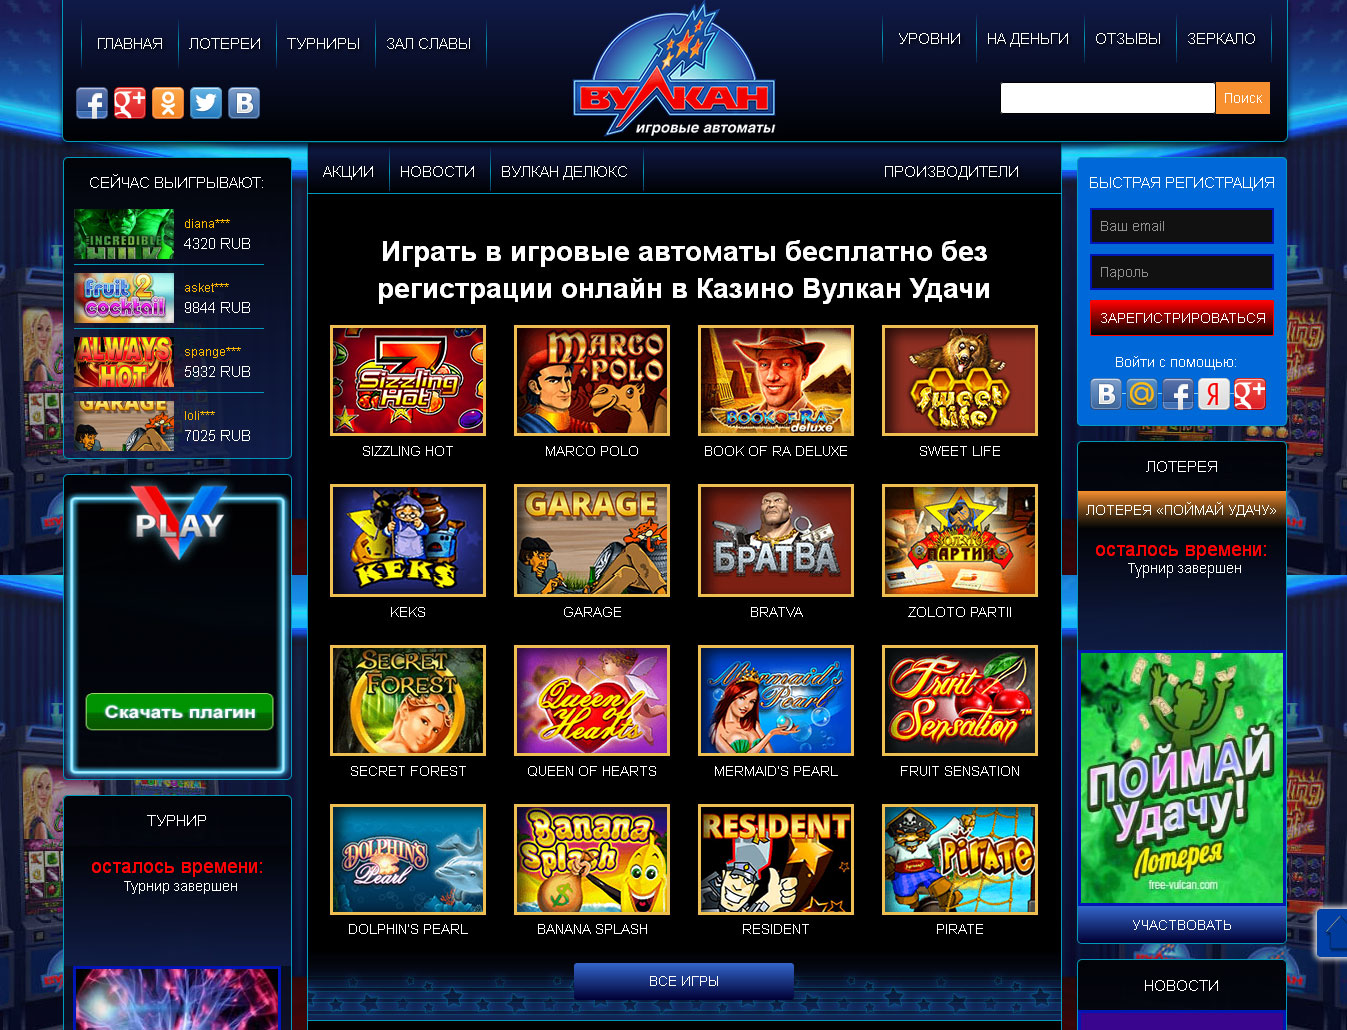 Азарт кипит в казино вулкан где онлайн автоматы Микрогейминг